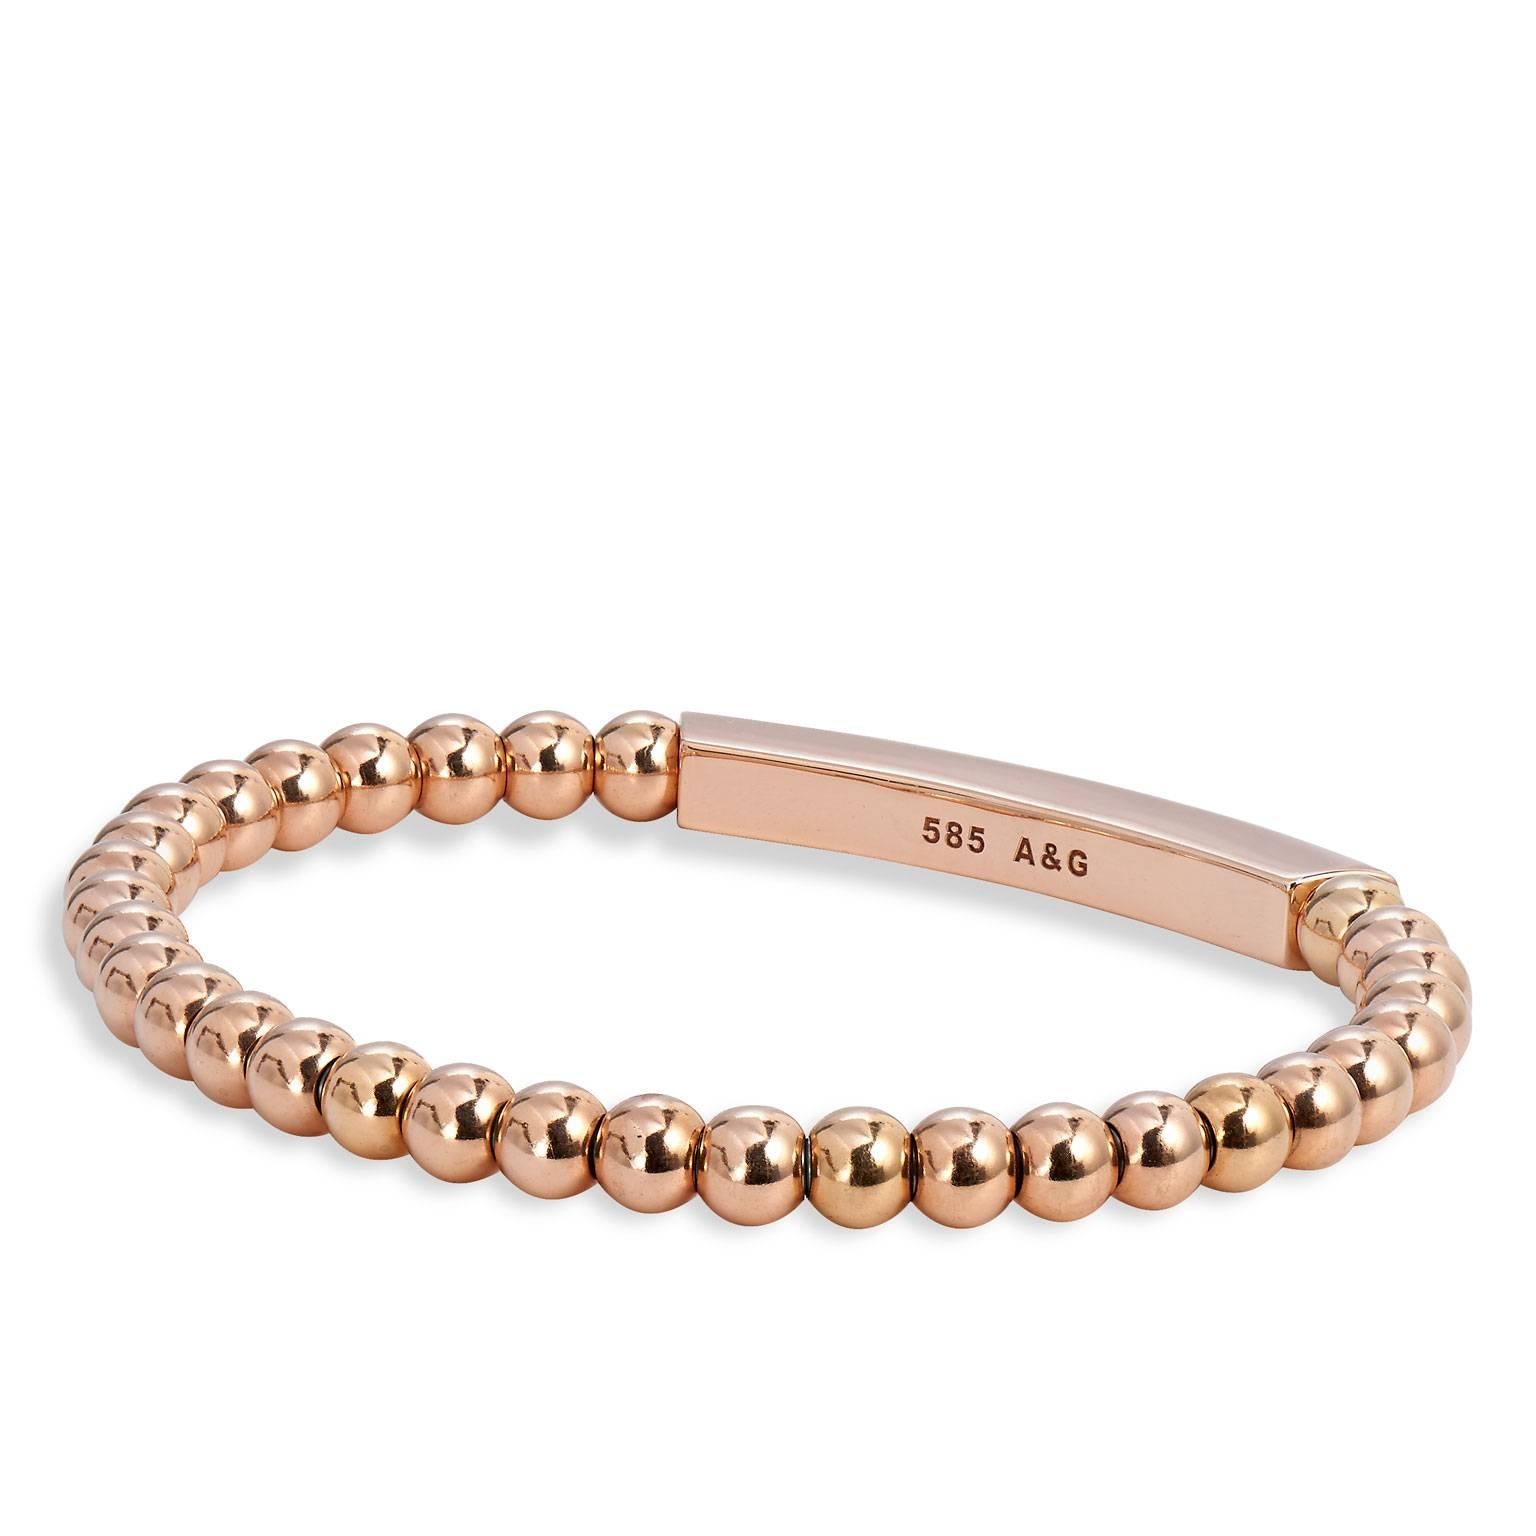 Bracelet with 14 karat rose gold beads (5mm bead size), 14 karat rose gold two-row rectangular bar embellishment with 0.68 carat of diamond pave set and surgical steel insert.